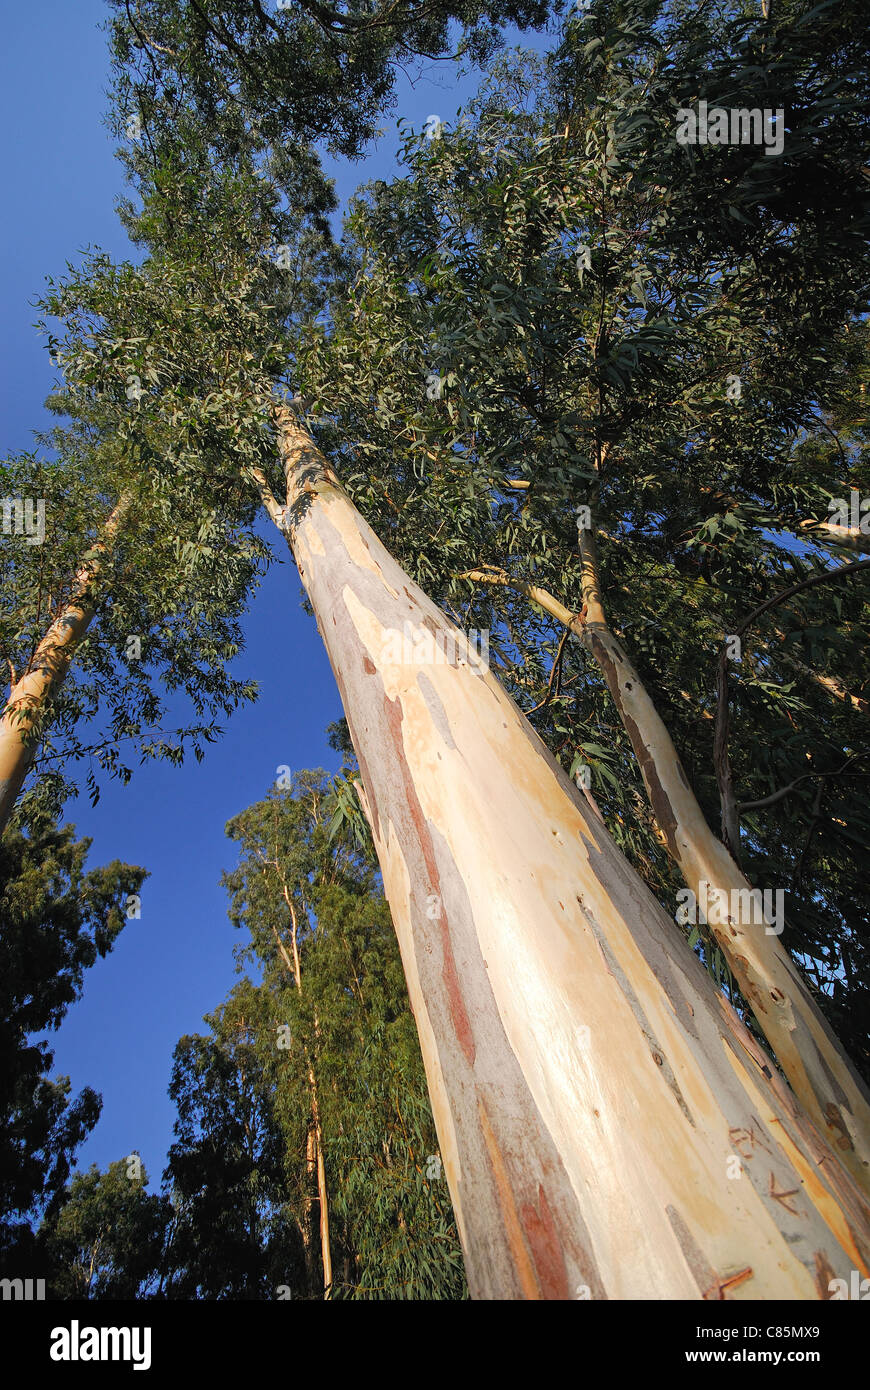 TURKEY. Eucalyptus trees Eucalyptus globulus showing stripped bark. Stock Photo